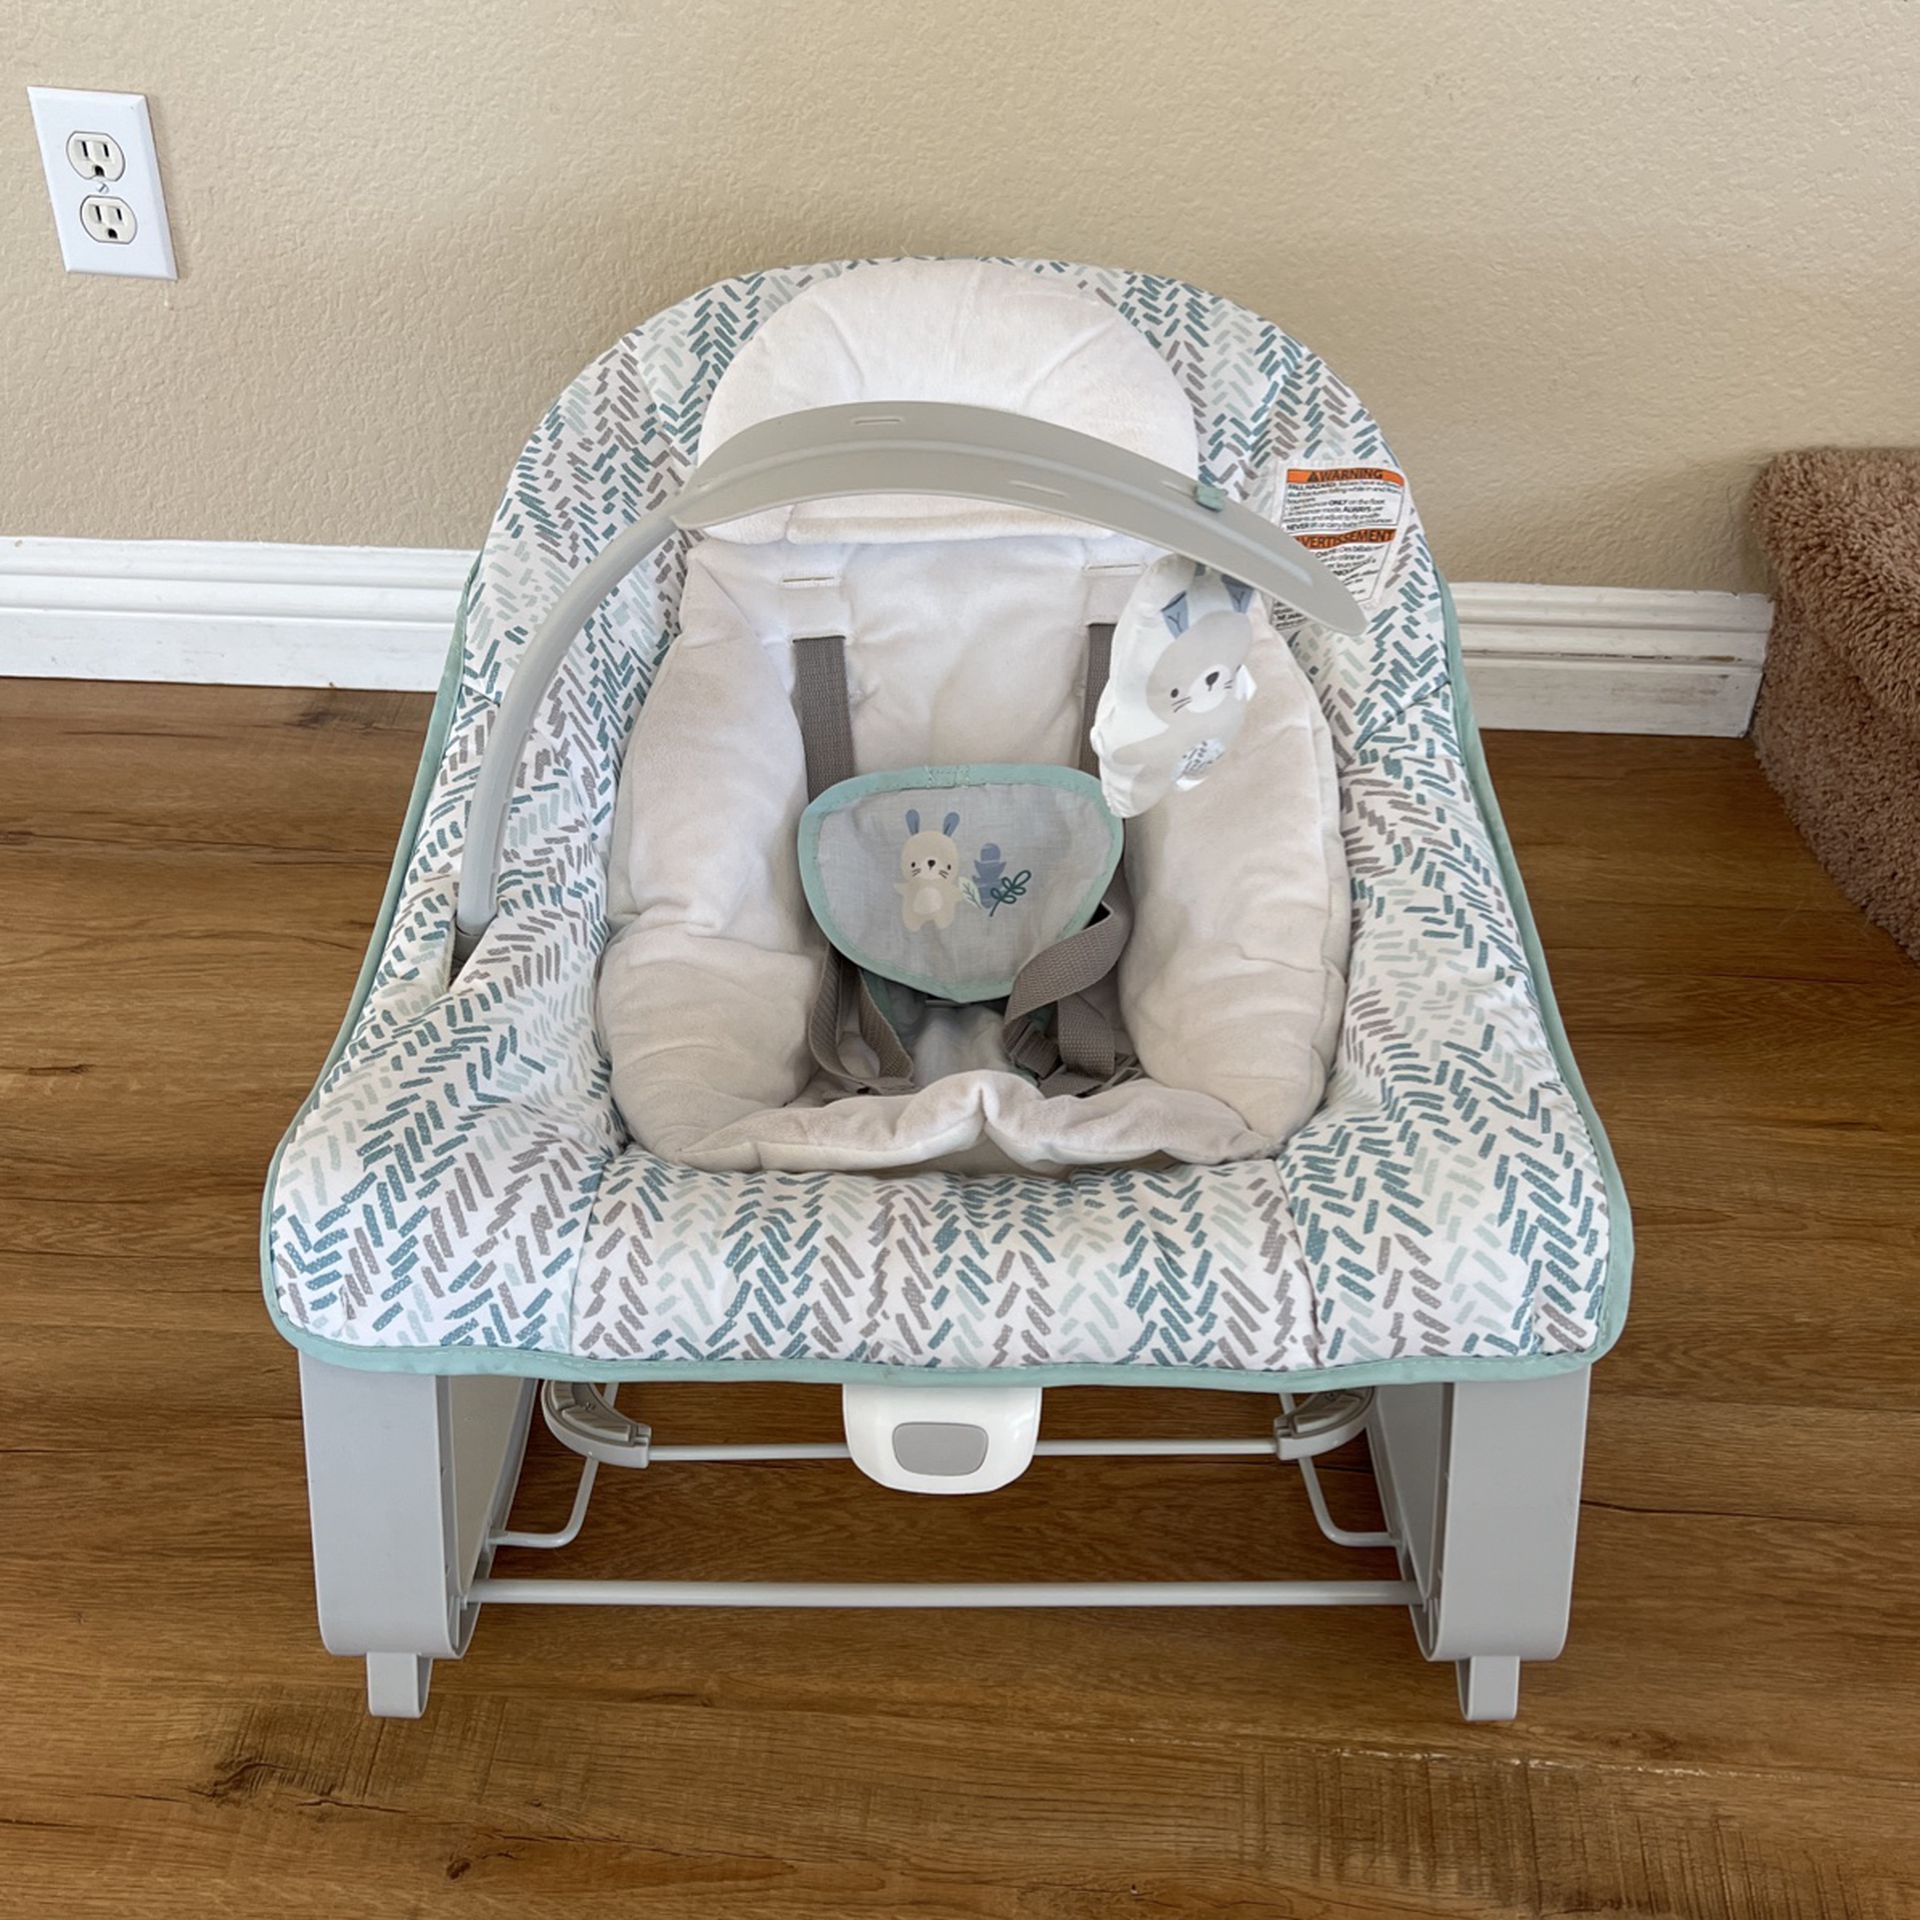 Ingenuity baby seat/bouncer 